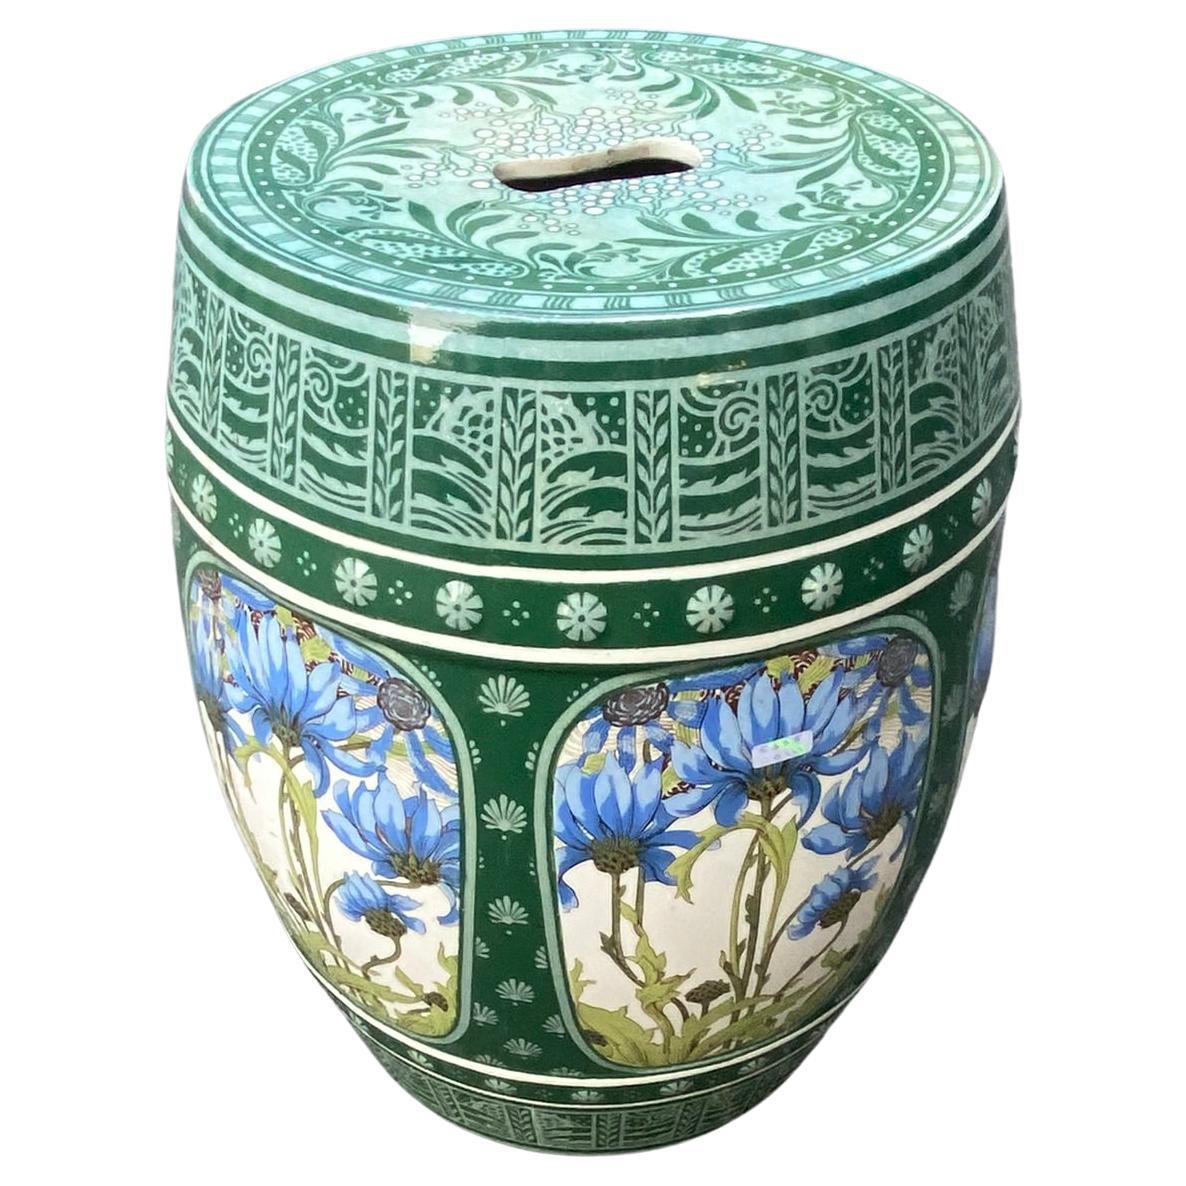 - Minton, Rare Art Nouveau Ceramic Stool circa 1880 Garden Stool?Stamped Minton